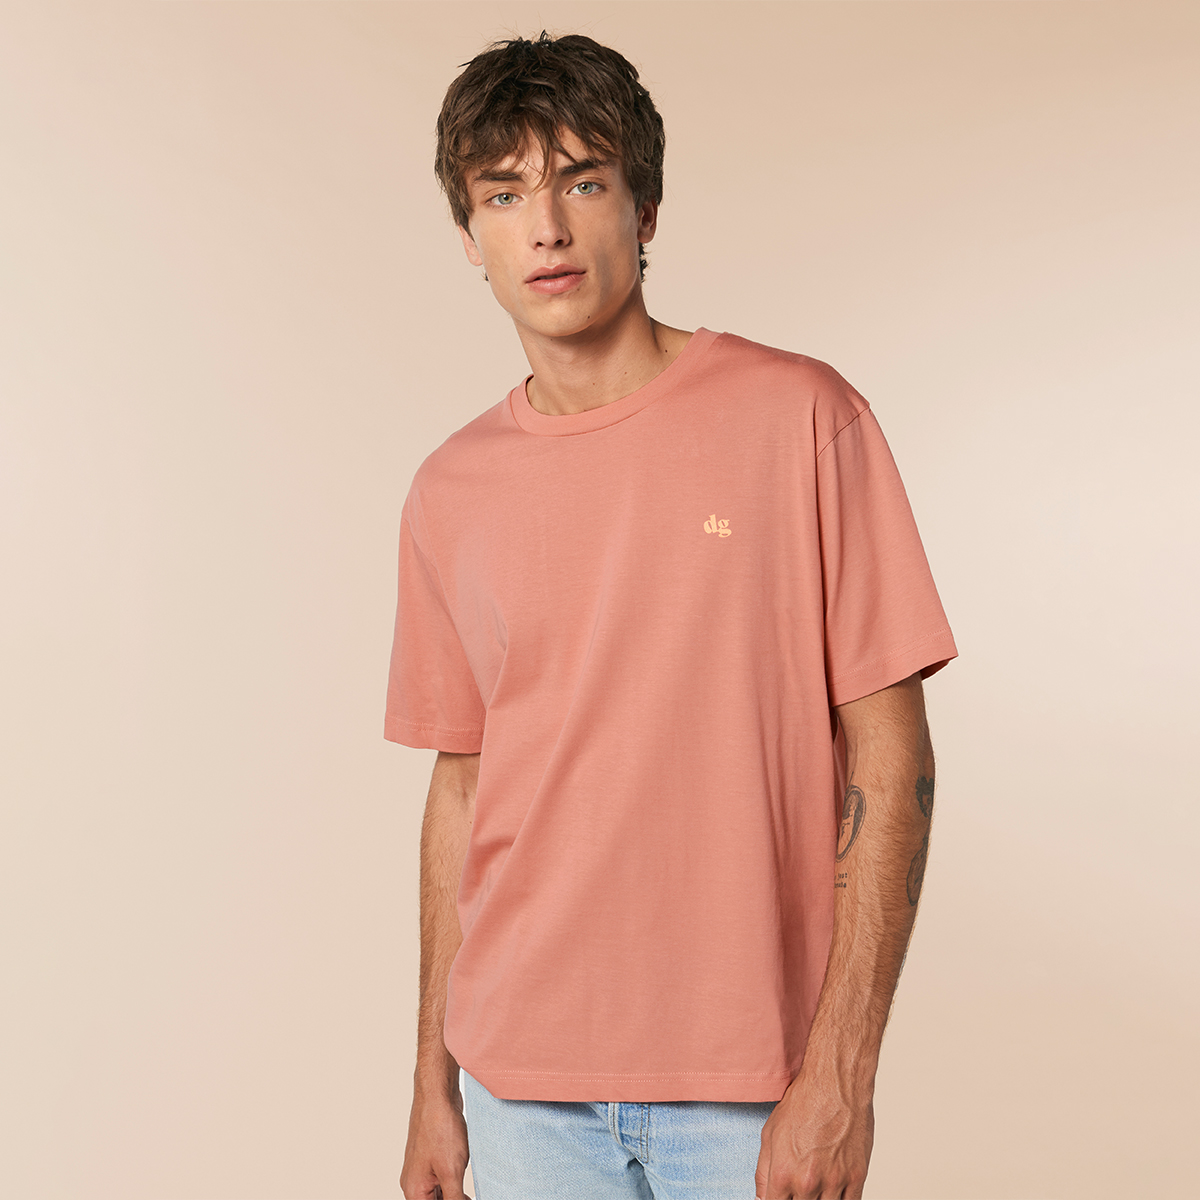 Mann trägt rosa orangenes T-Shirt